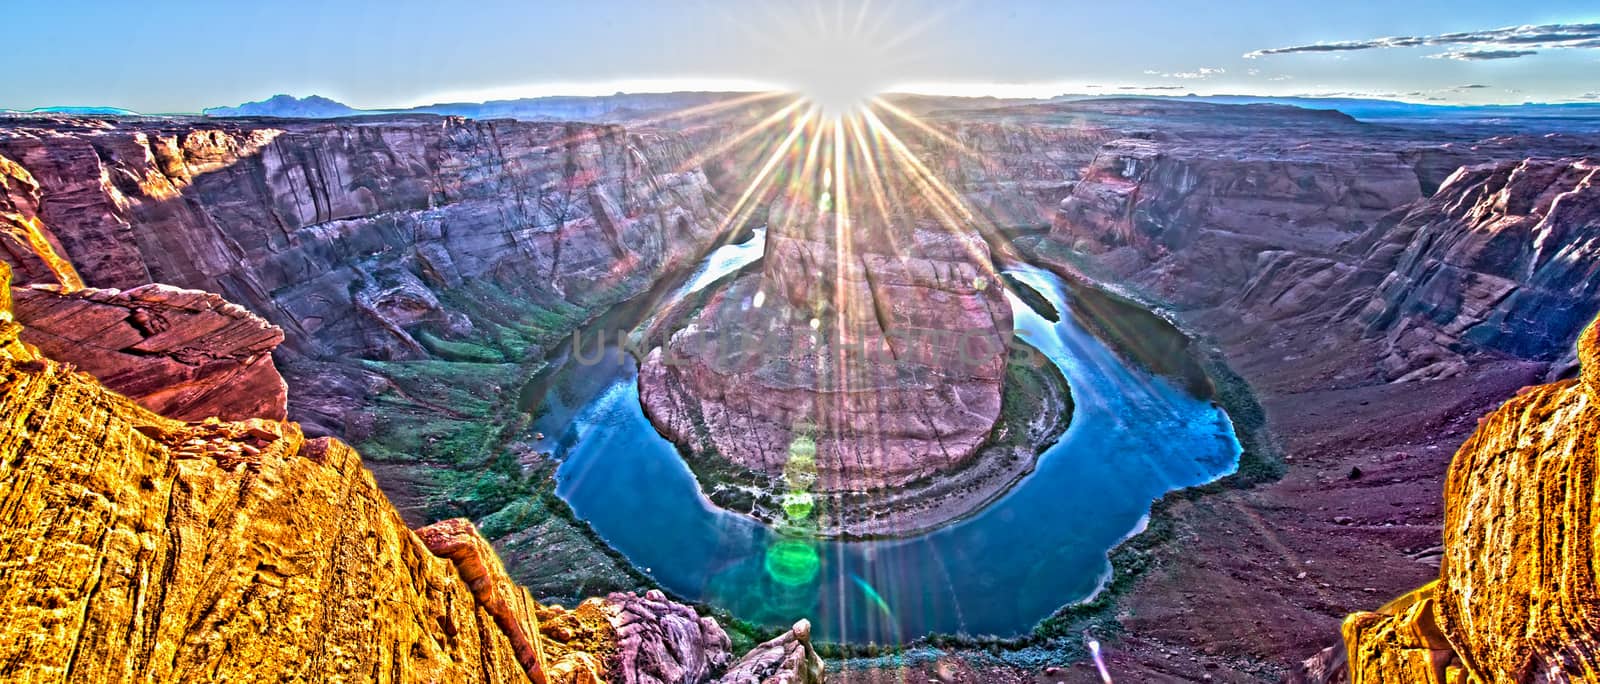 Sunset at the Horseshoe Band - Grand Canyon by digidreamgrafix